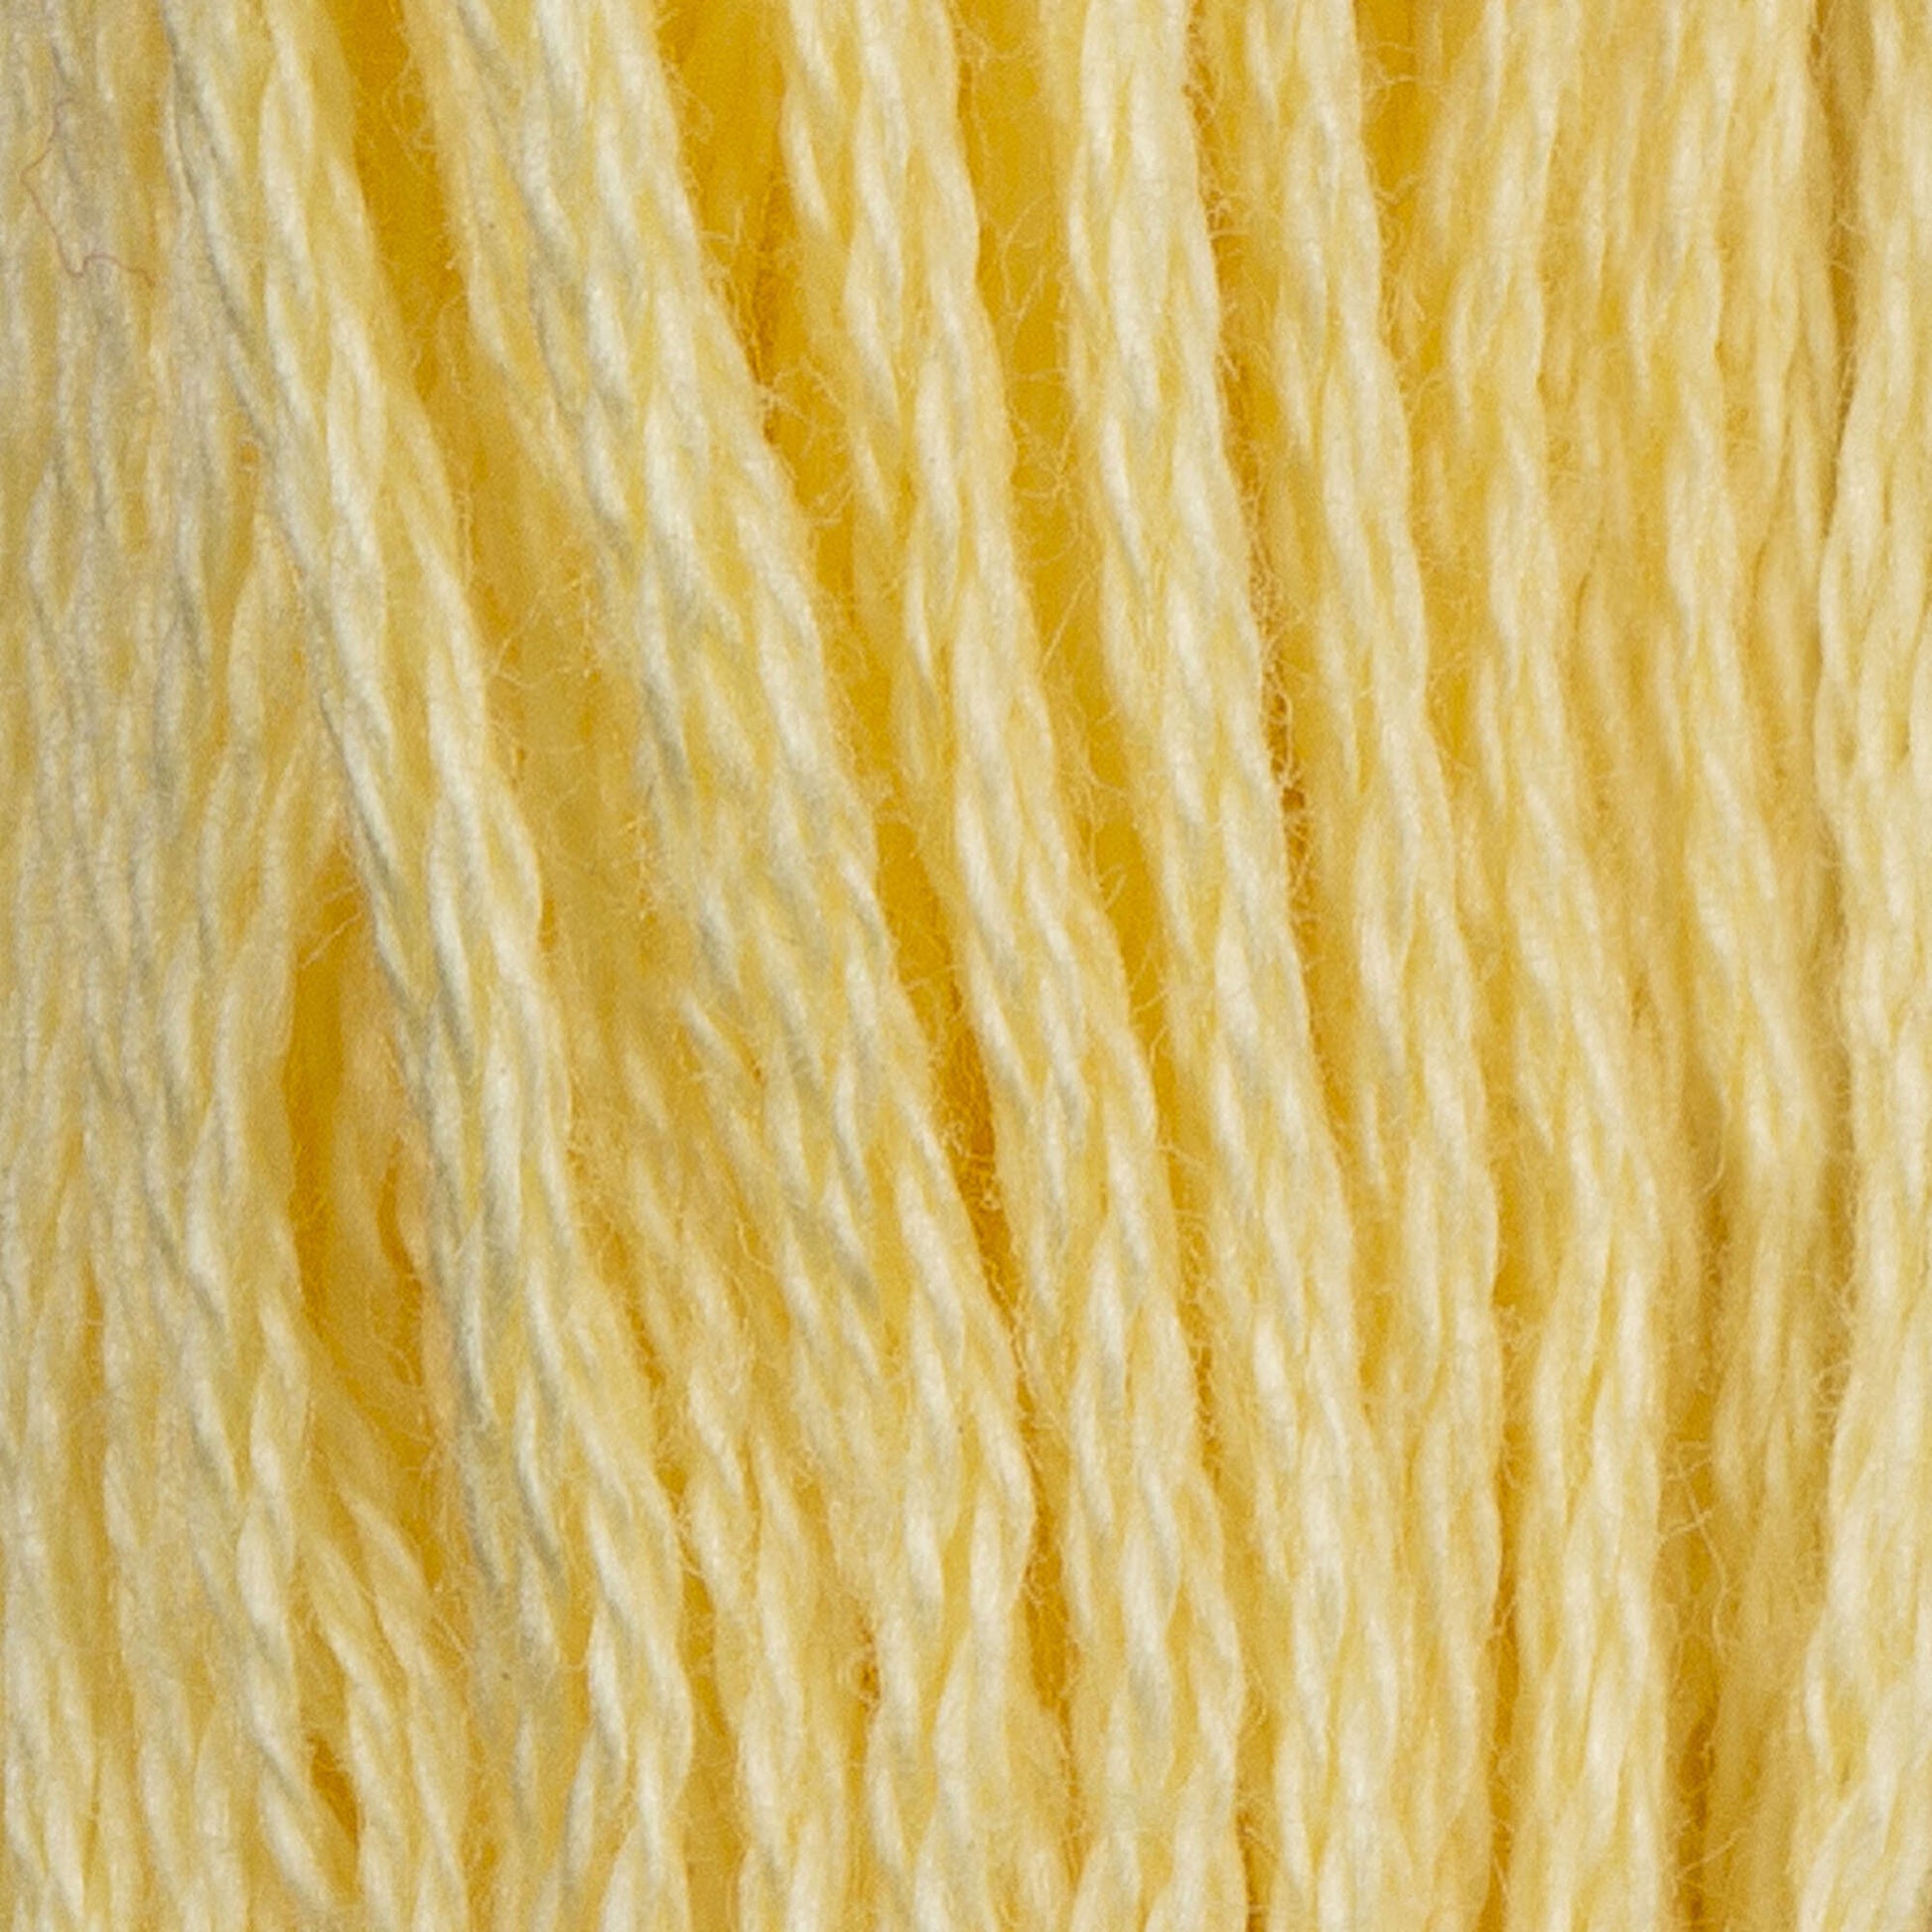 Coats & Clark Cotton Embroidery Floss Yellow Dark